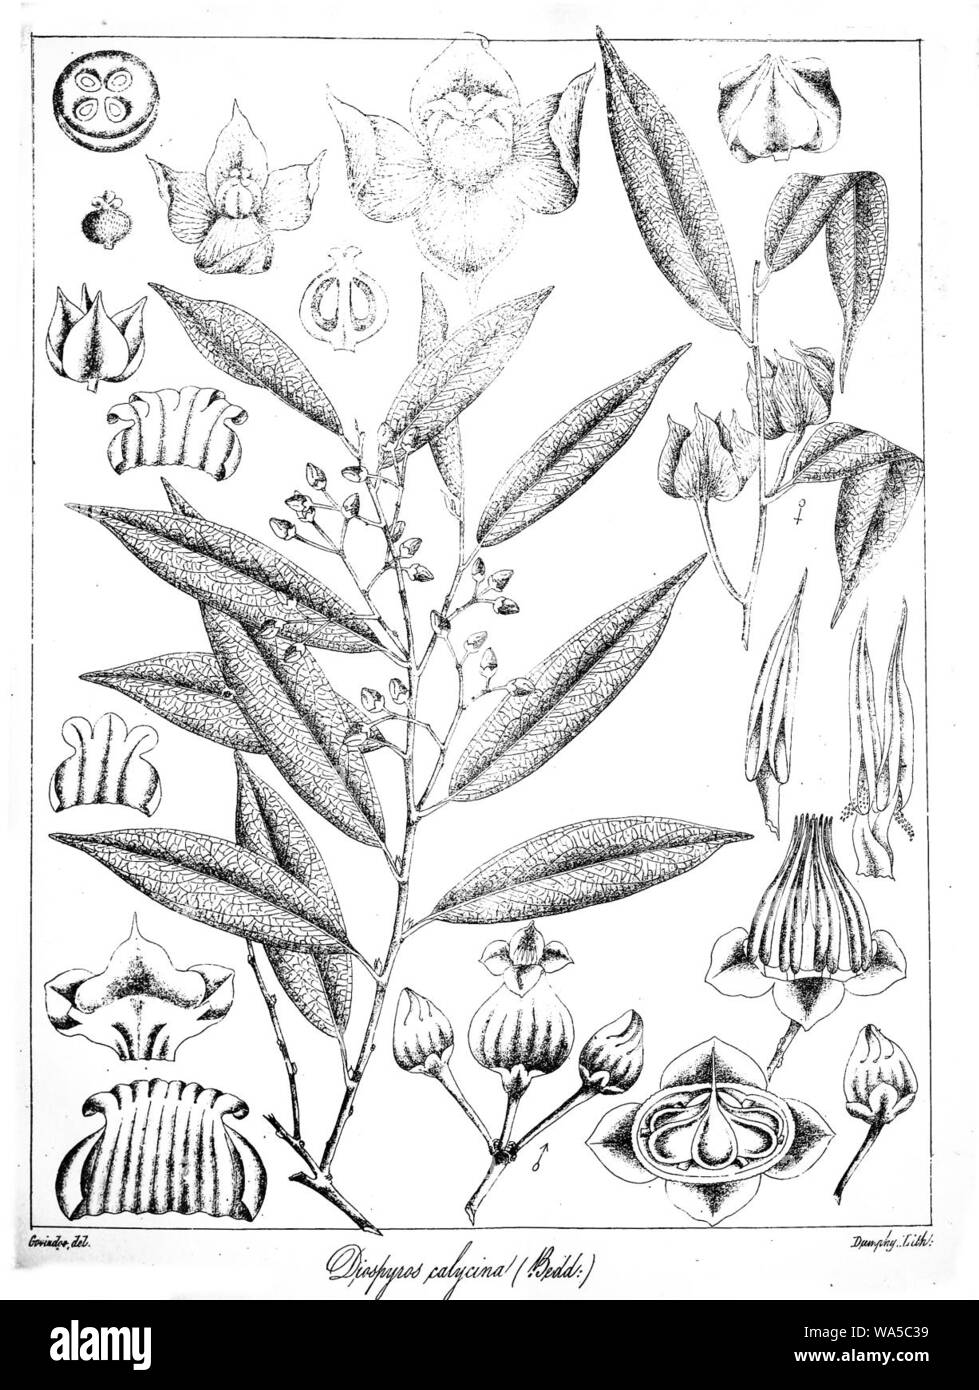 Diospyros calycina Govindoo. Stock Photo